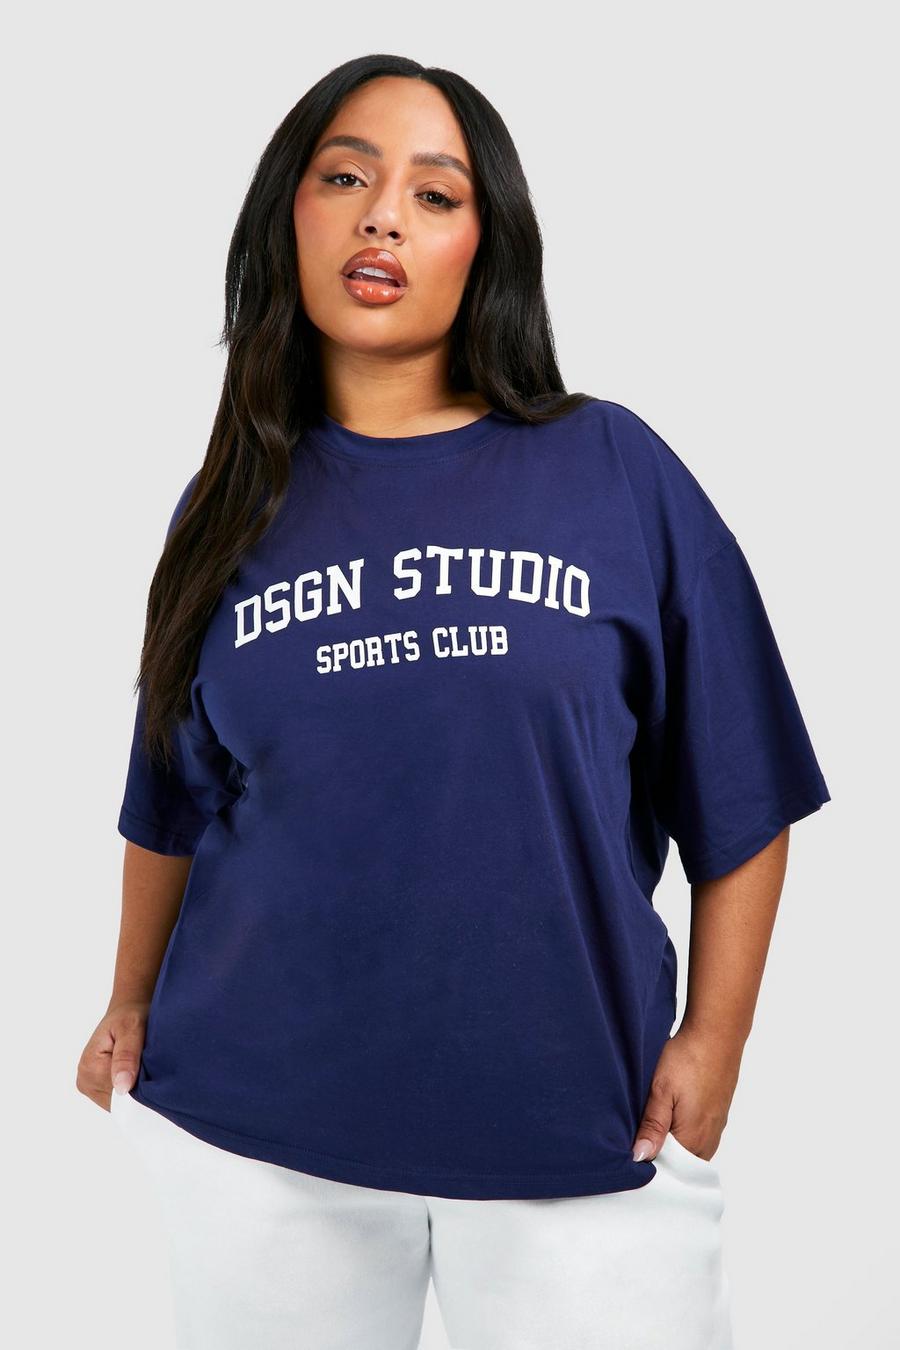 Plus Oversize T-Shirt mit Dsgn Studio Sports Club Print, Navy